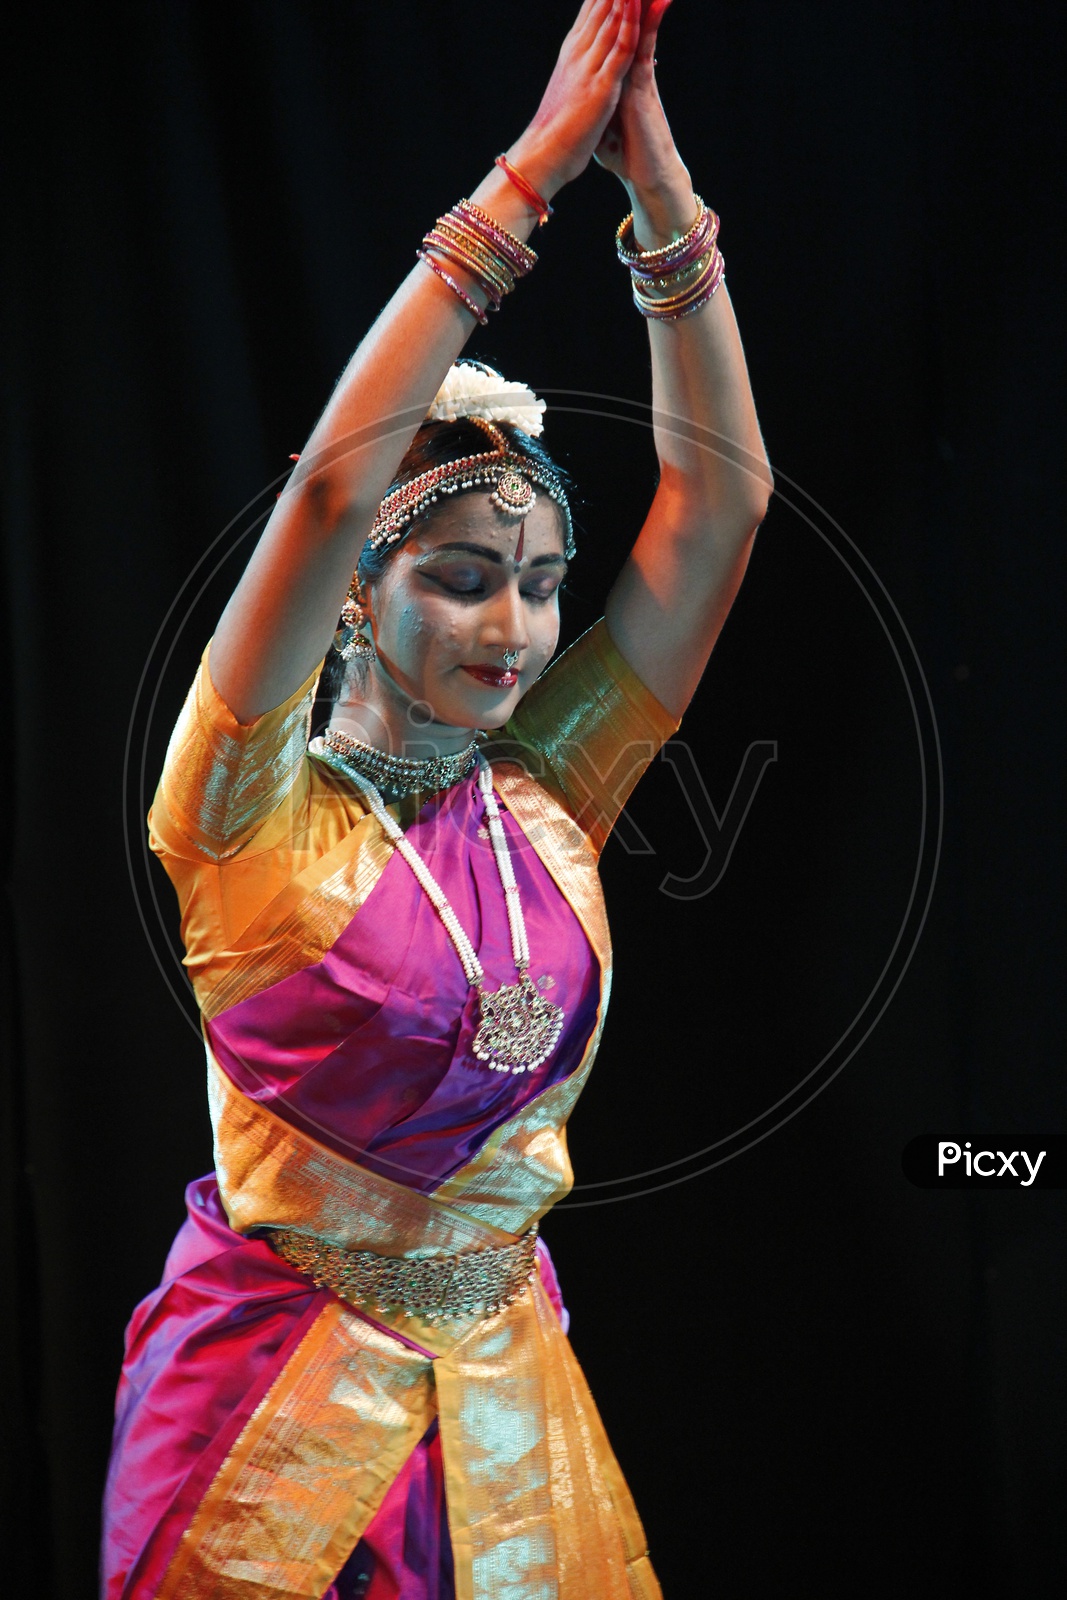 Indian Classical Dancer Posture of a Classical Dance Art Form